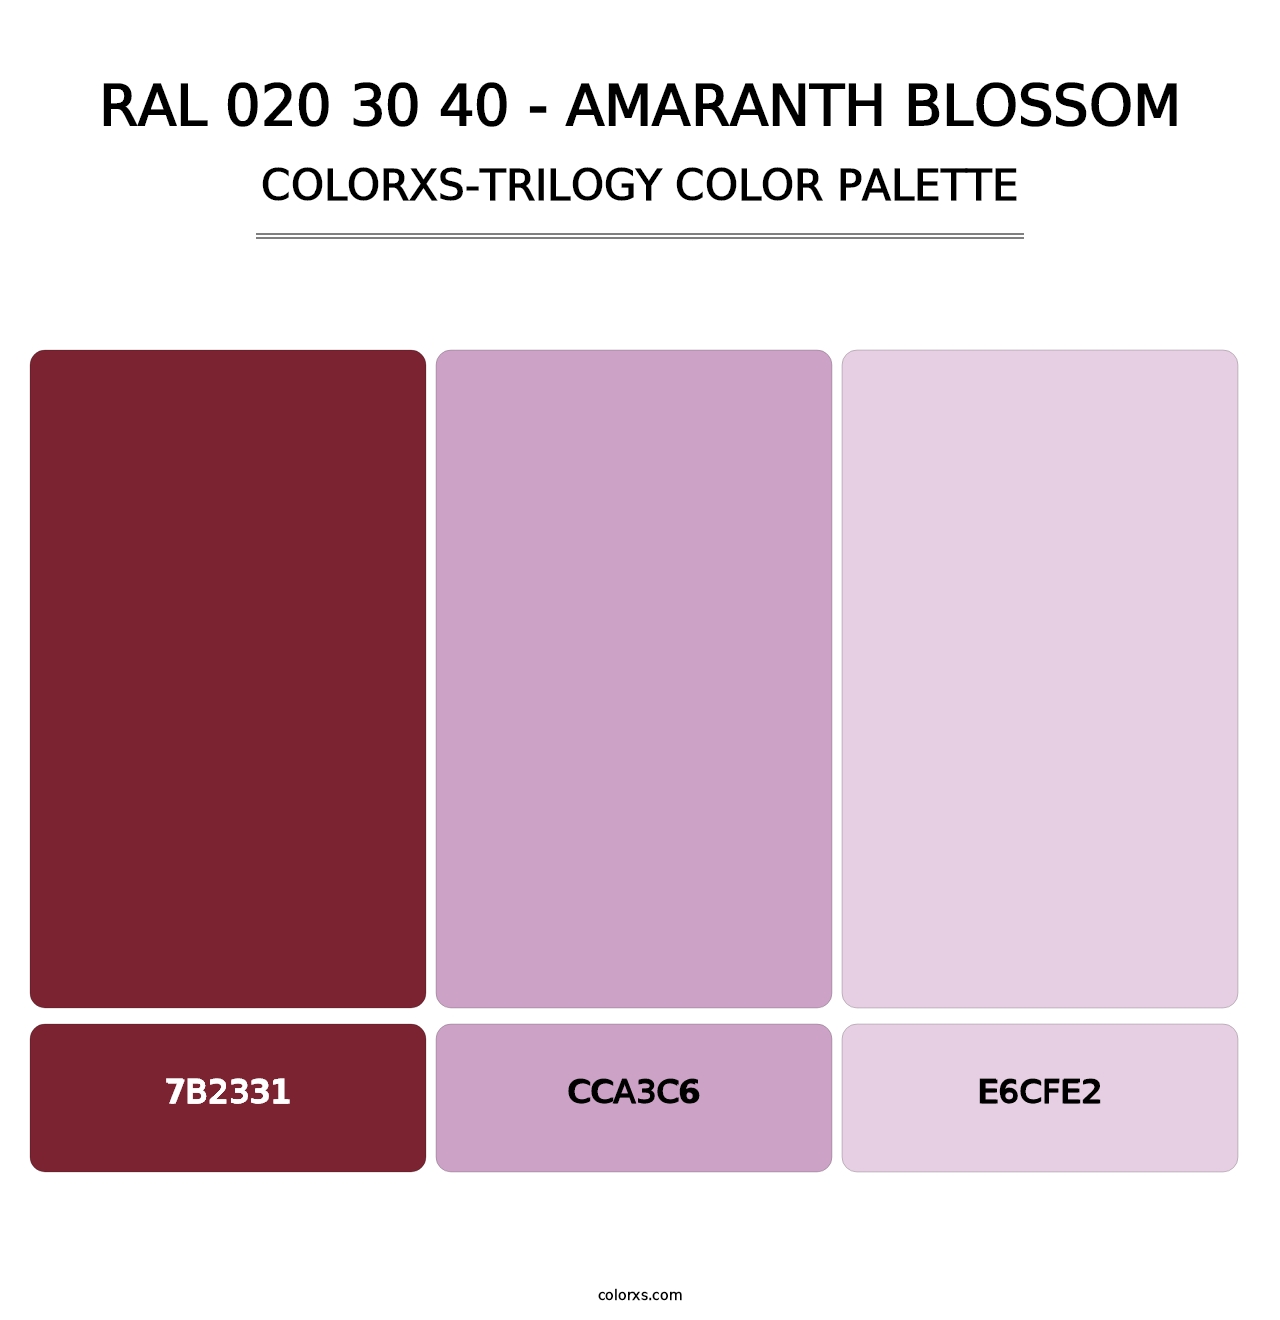 RAL 020 30 40 - Amaranth Blossom - Colorxs Trilogy Palette